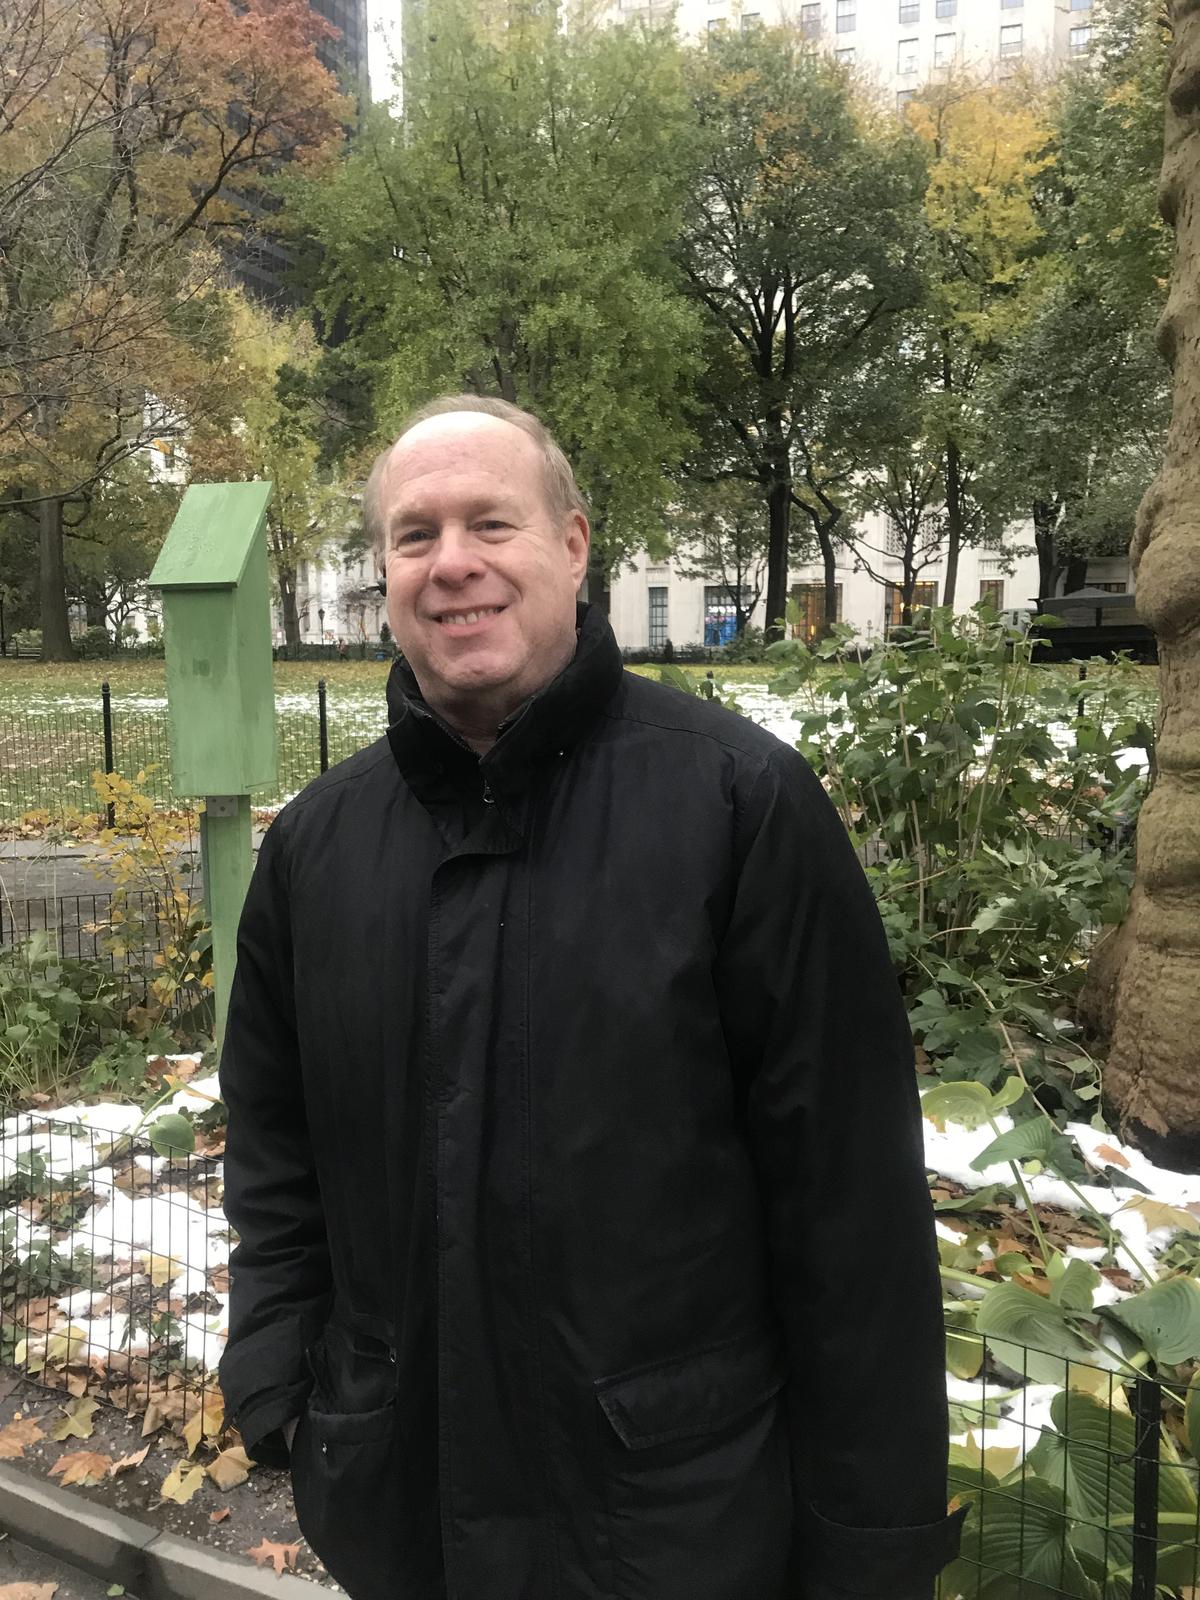 Steven Abram in Madison Square Park, New York, on Nov. 16, 2018. (Stuart Liess/The Epoch Times)